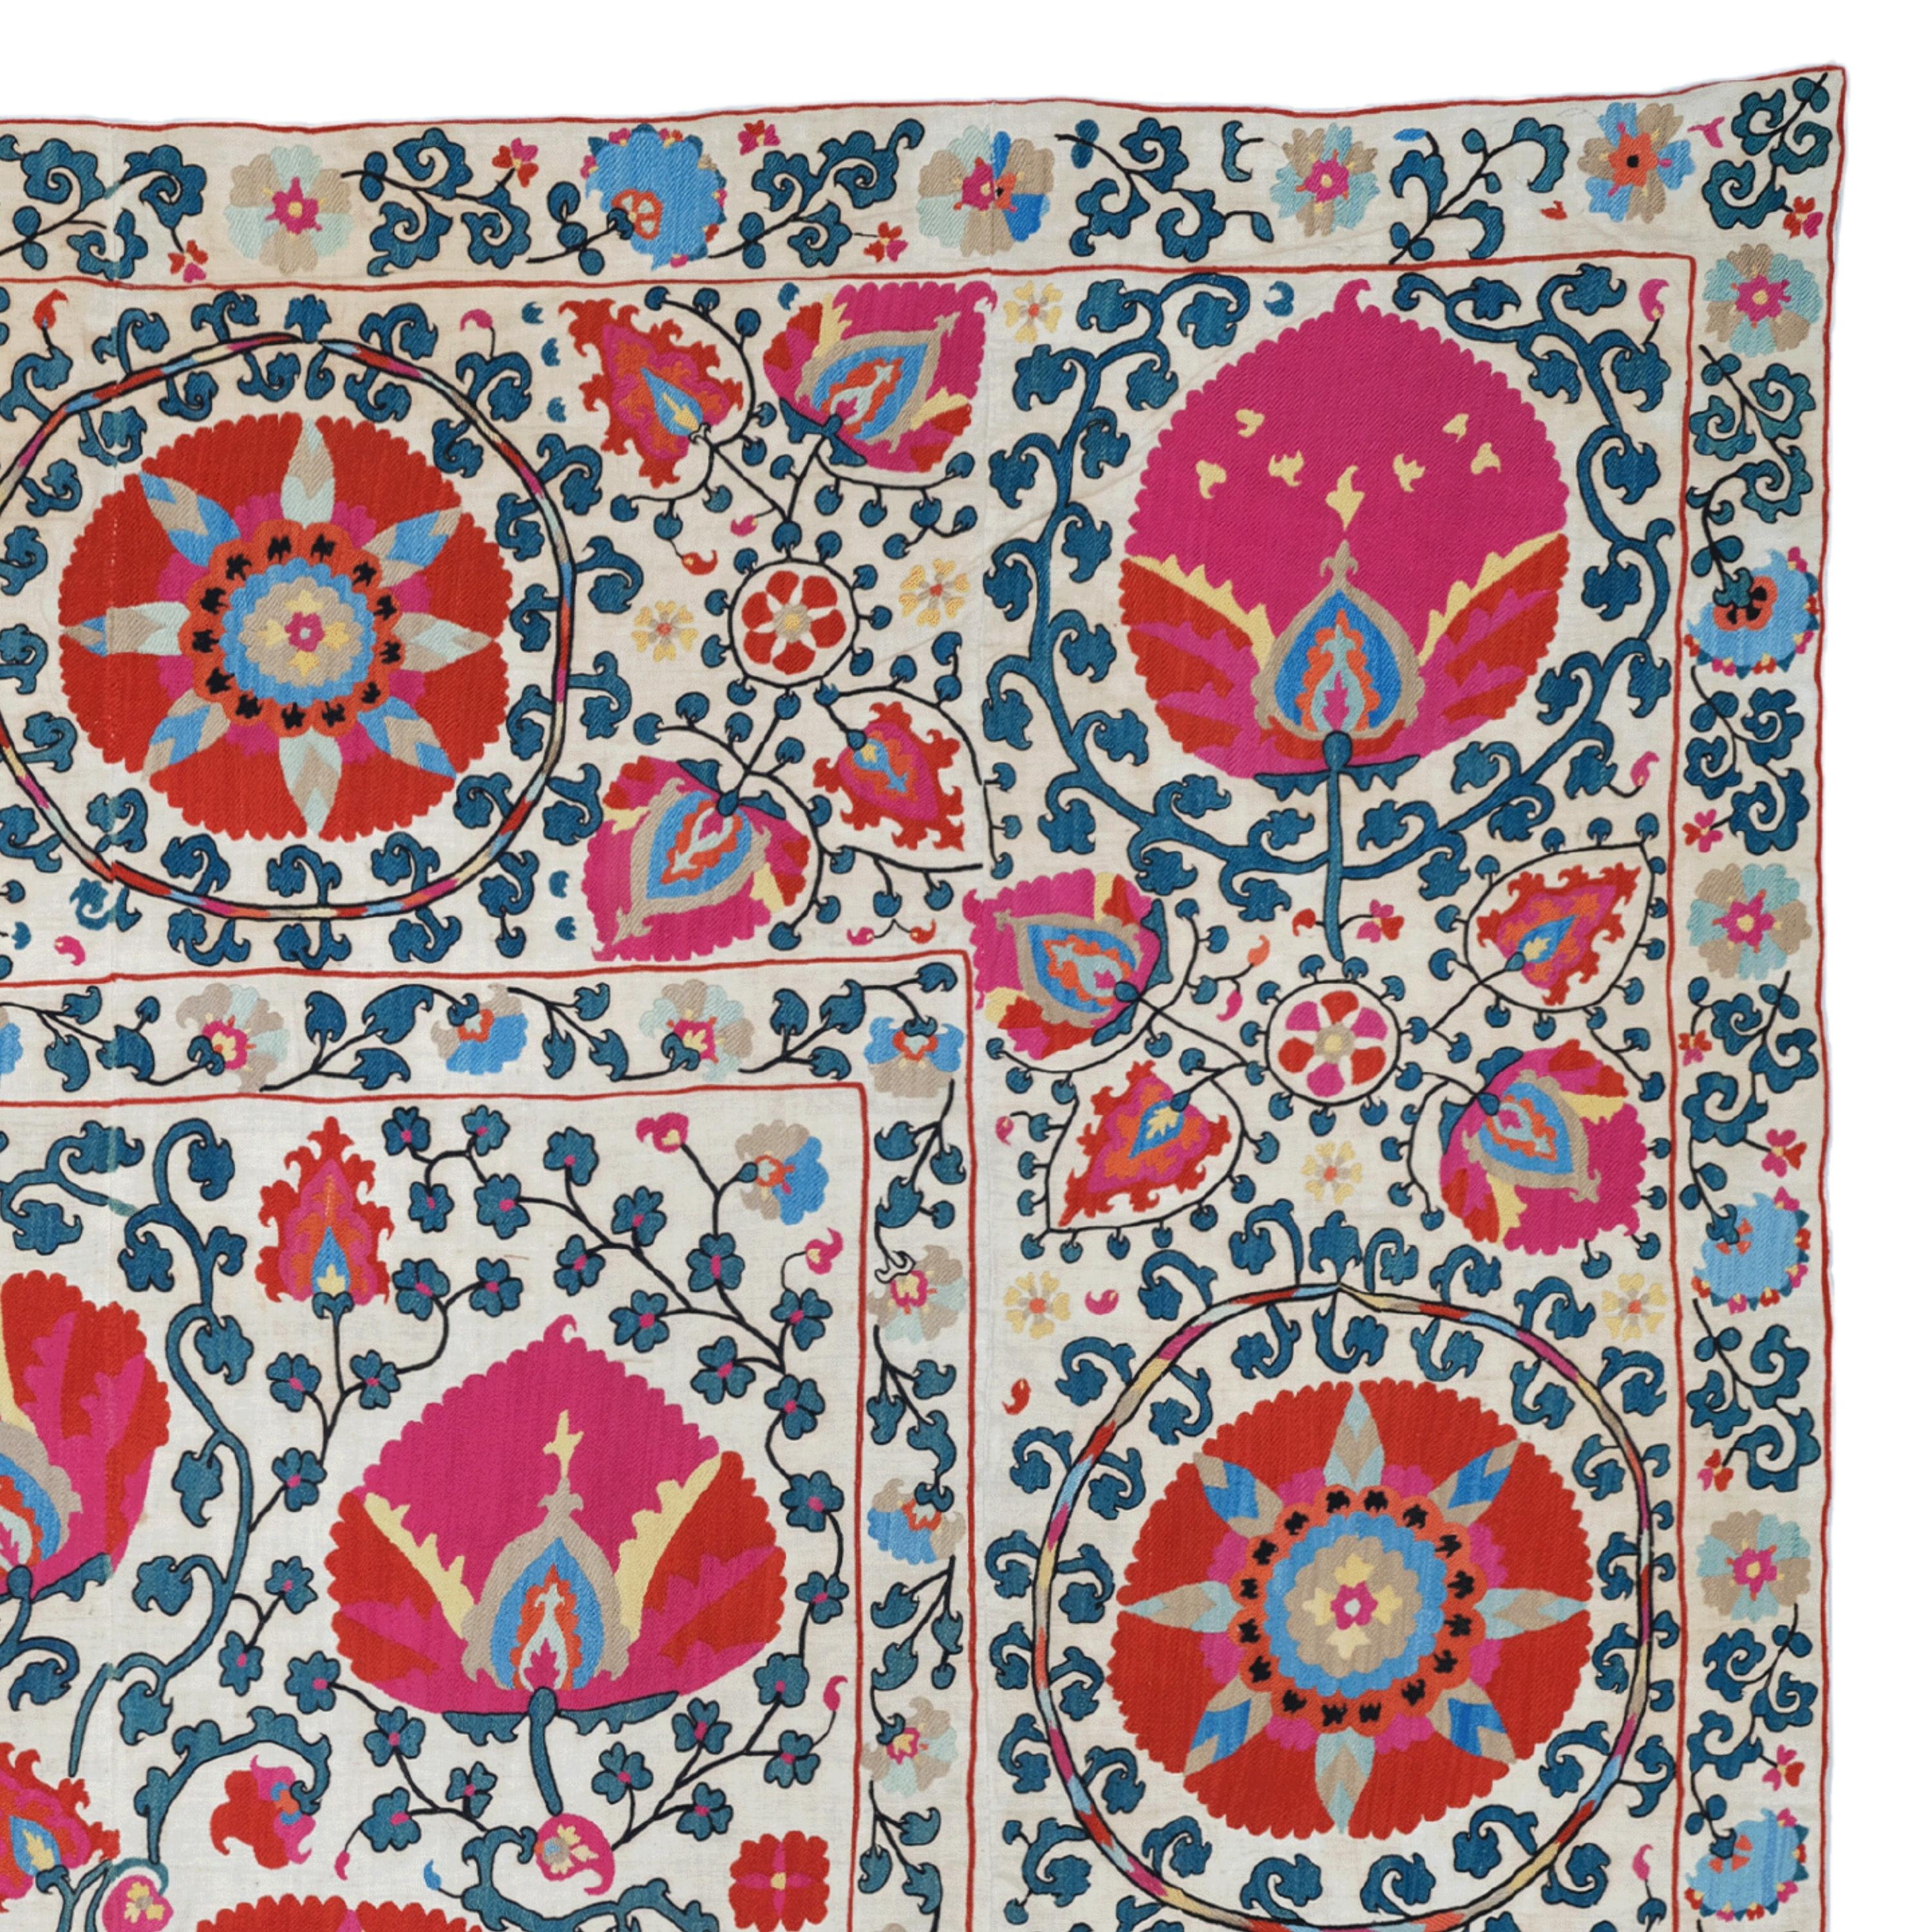 Early 19th Century Uzbekistan Shahrisyabz Suzani, Silk on Cotton Ground For Sale 1